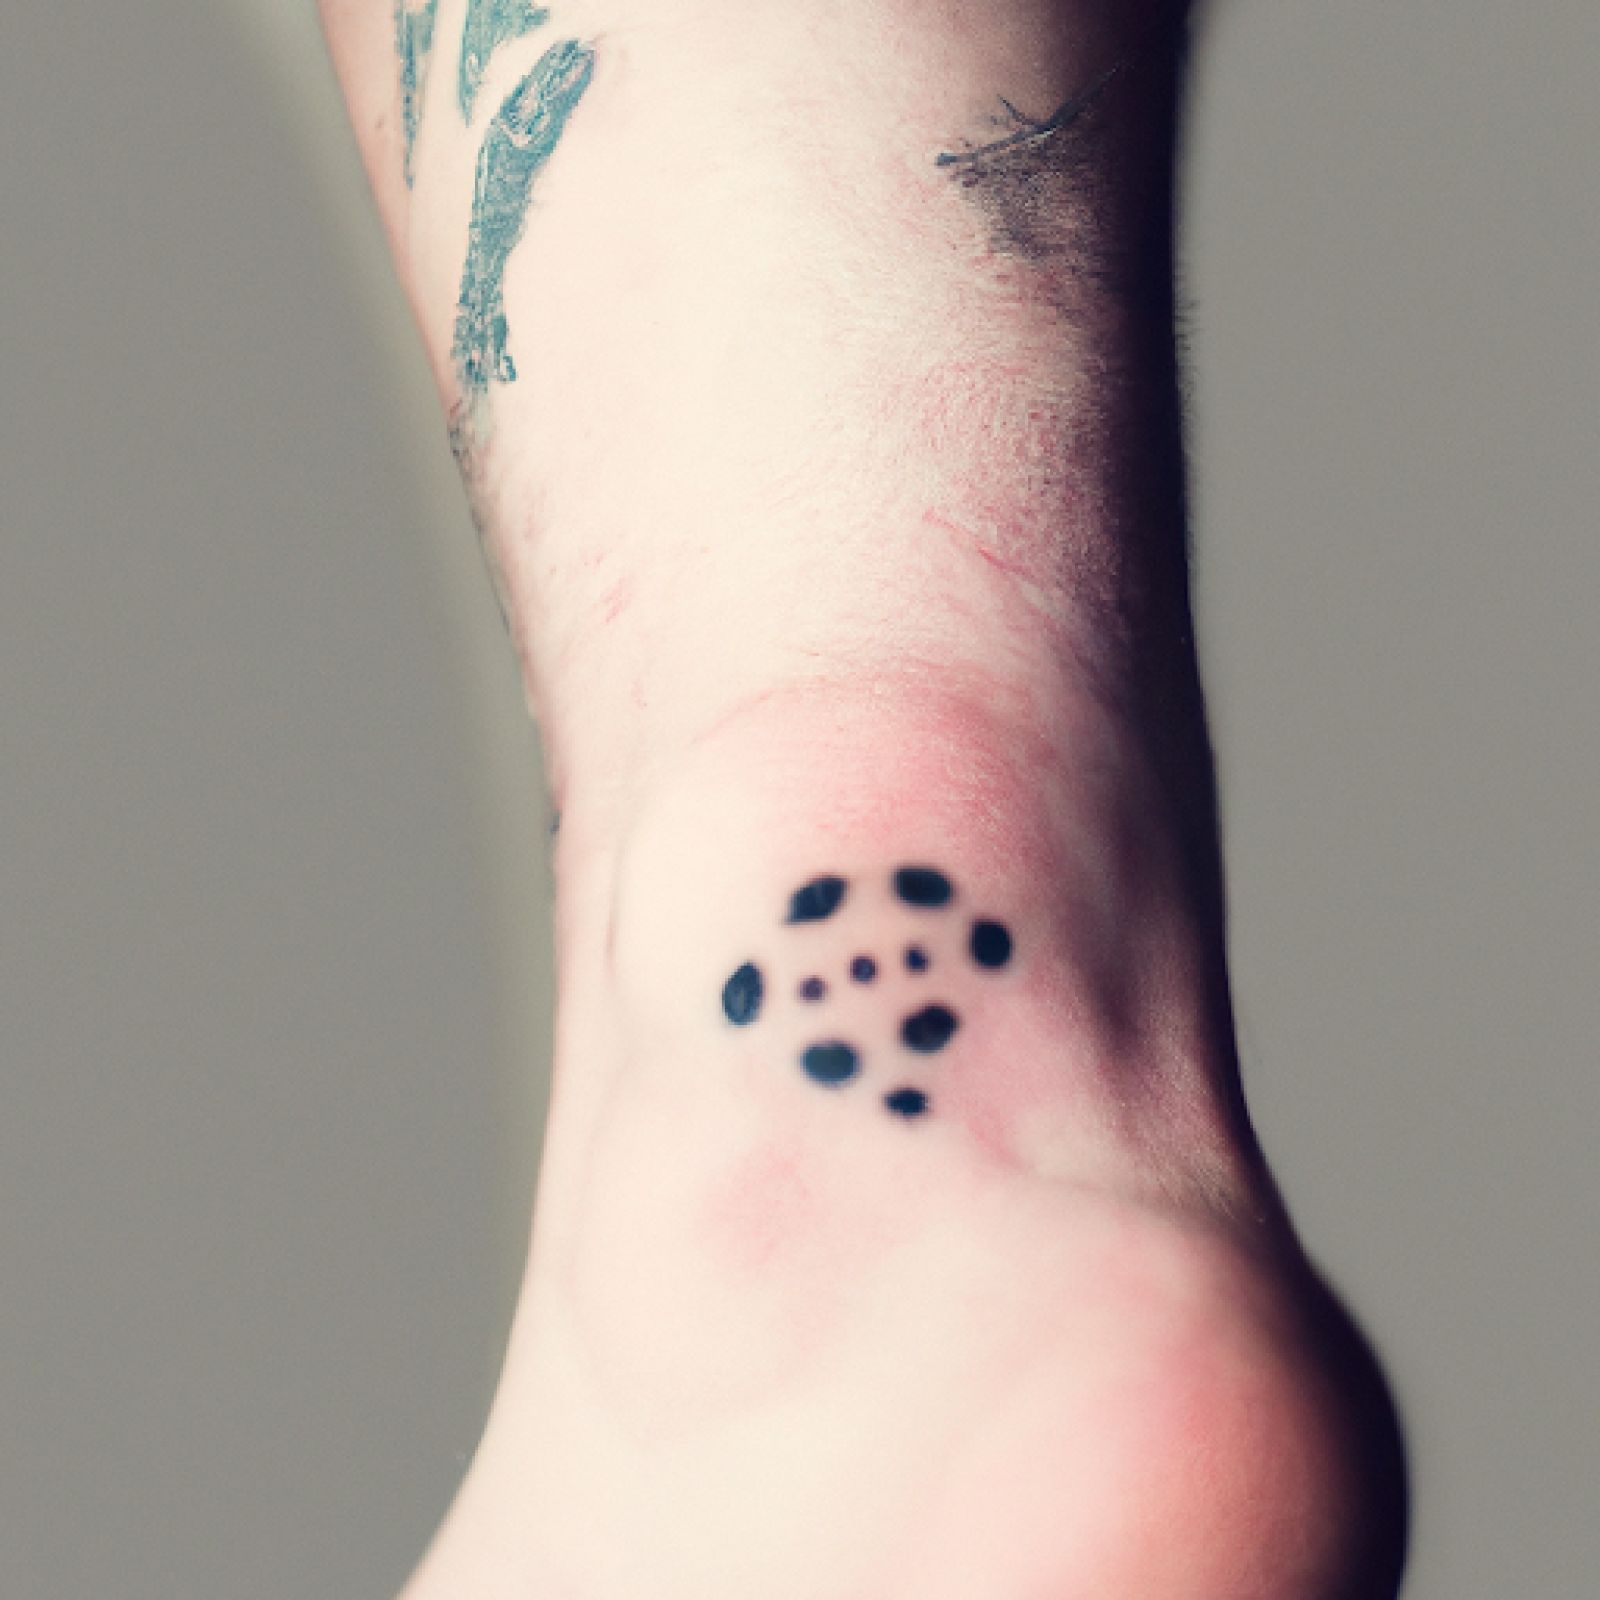 Trash polka tattoo on foot for men